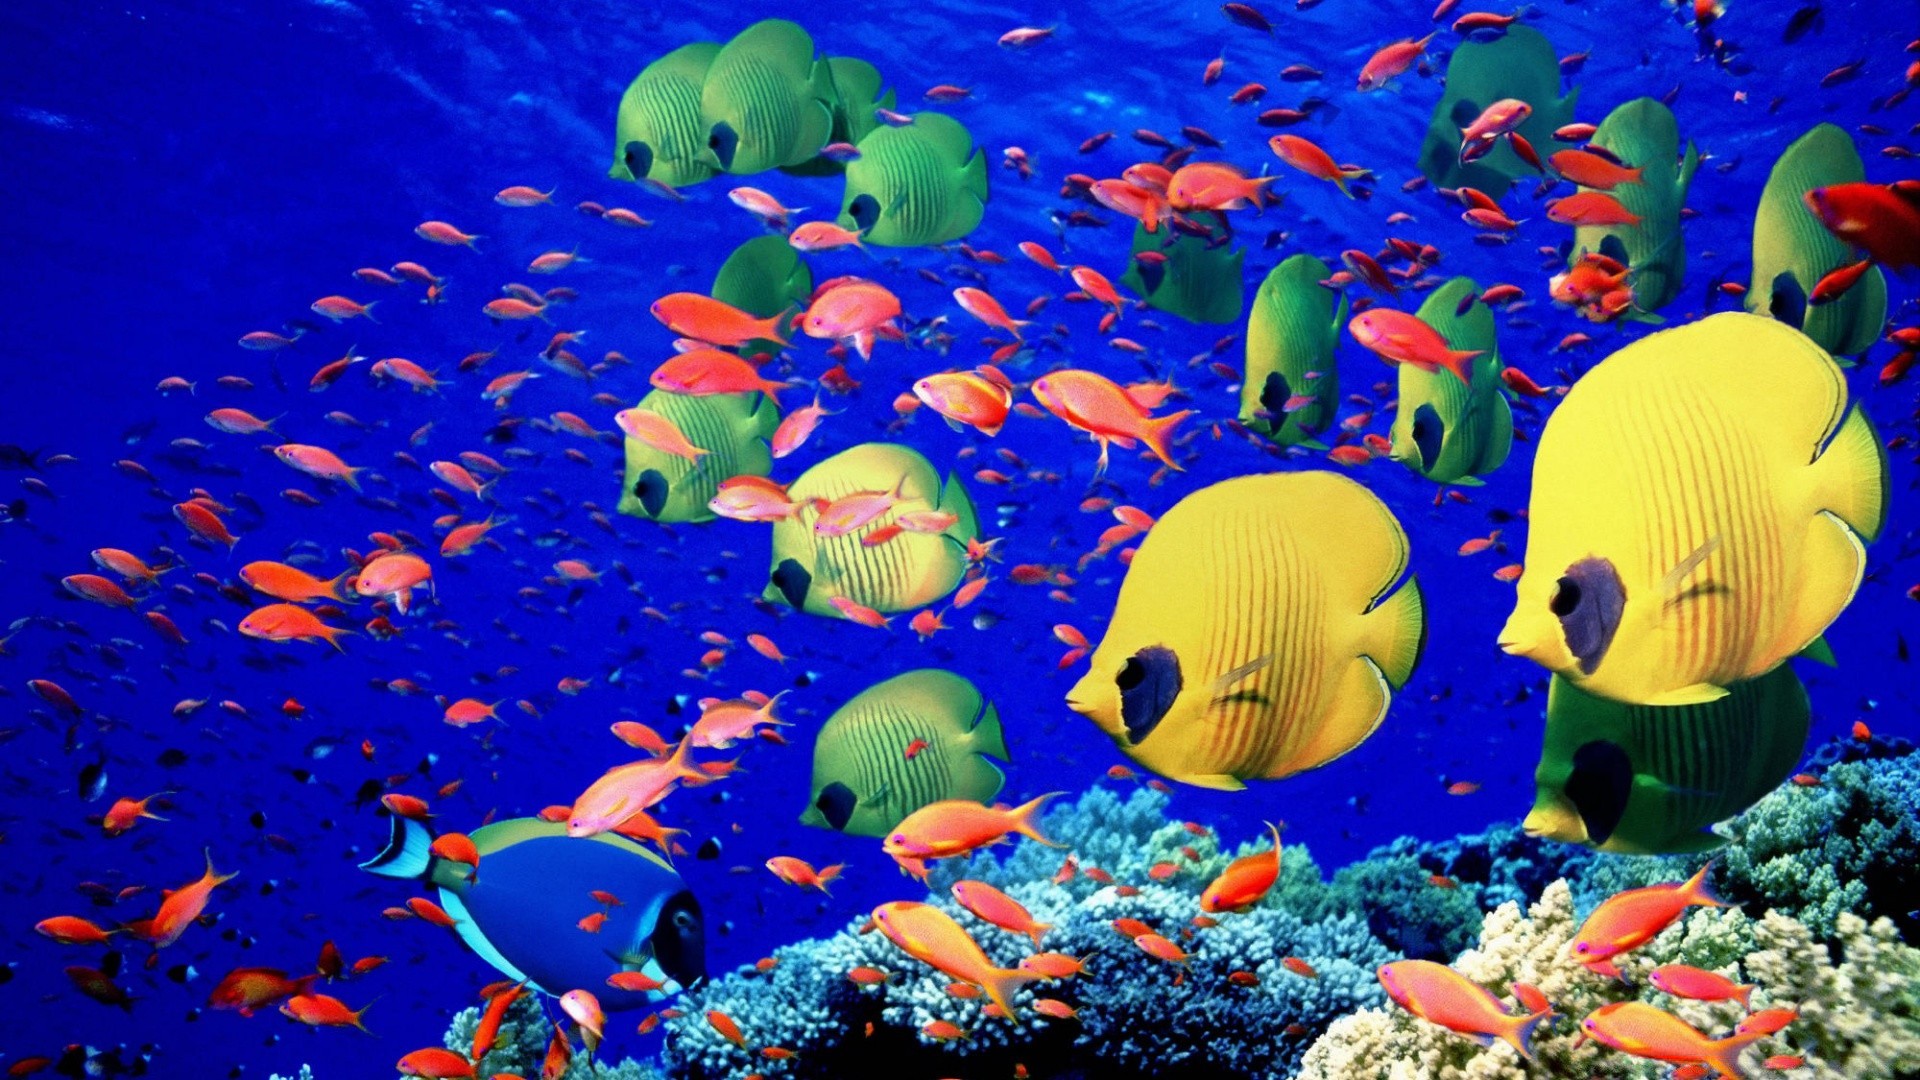 amphibians underwater aquarium fish swimming water coral ocean reef diving sea marine tropical aquatic jellyfish deep goldfish scuba